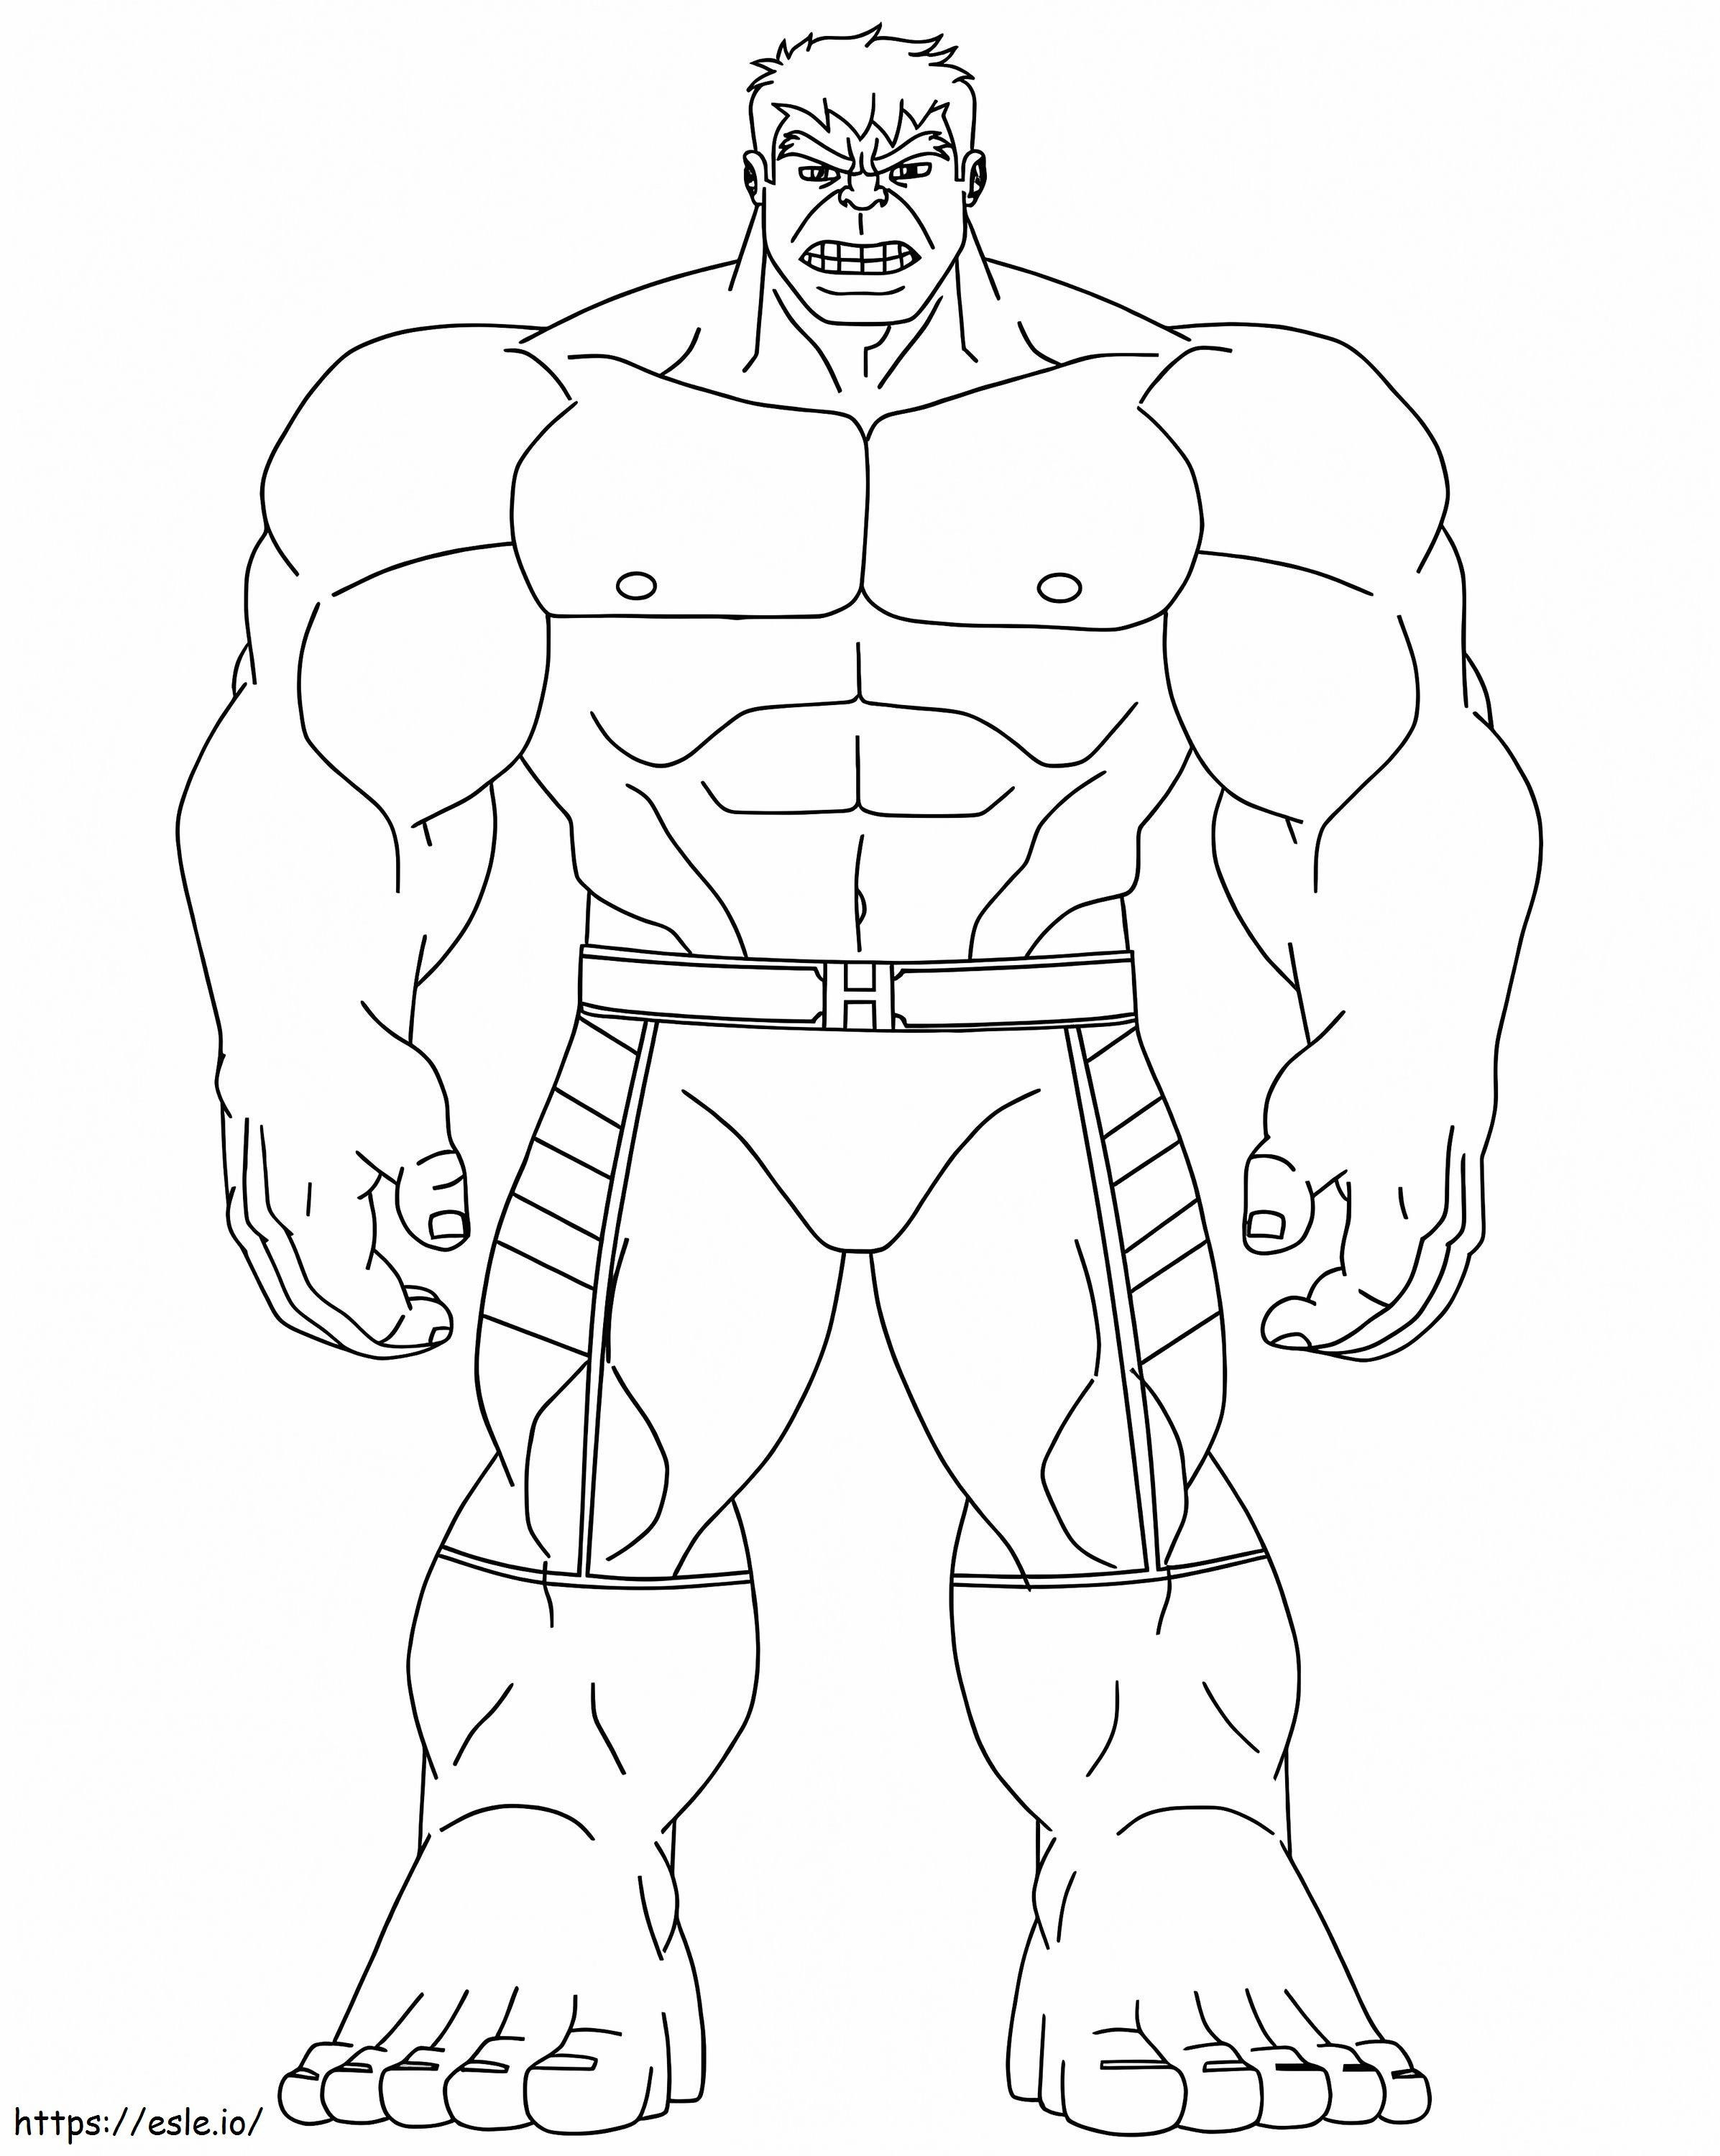 Hulk em pé para colorir